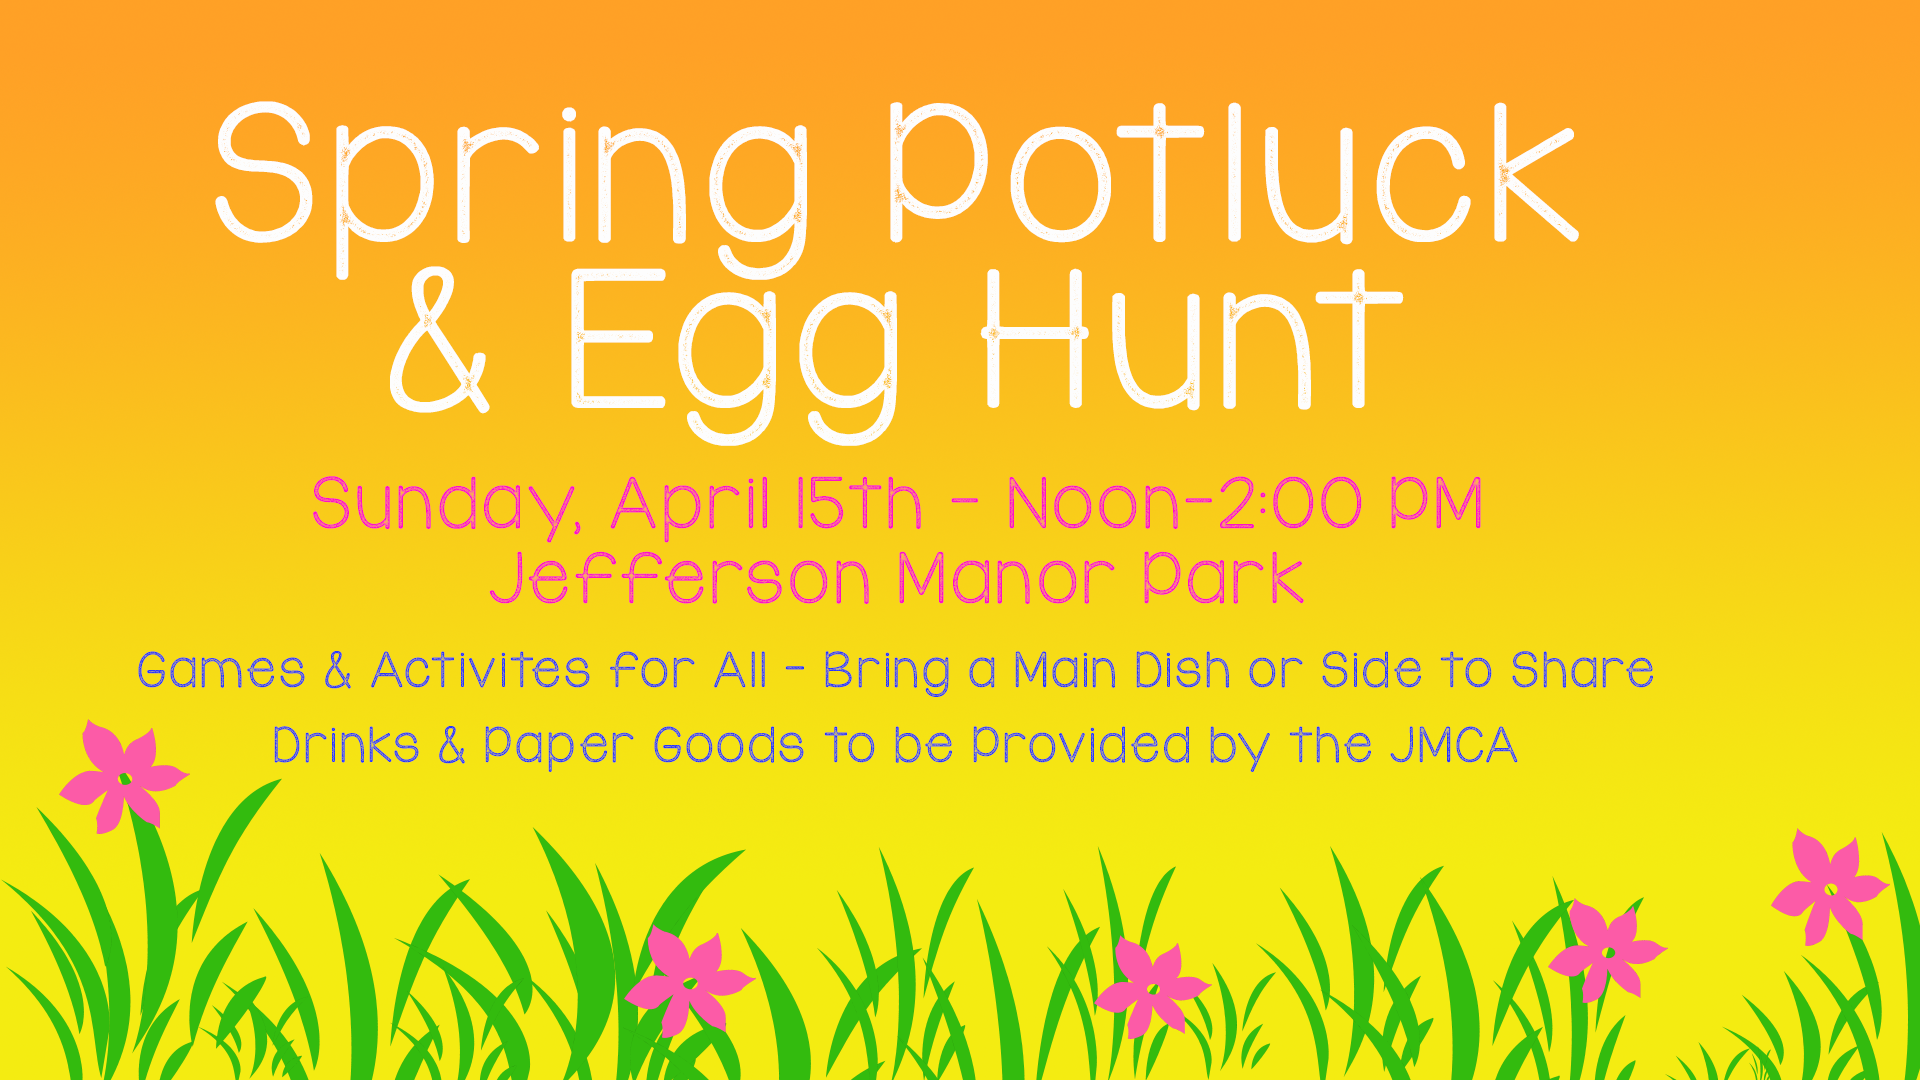 Spring Potluck & Egg Hunt